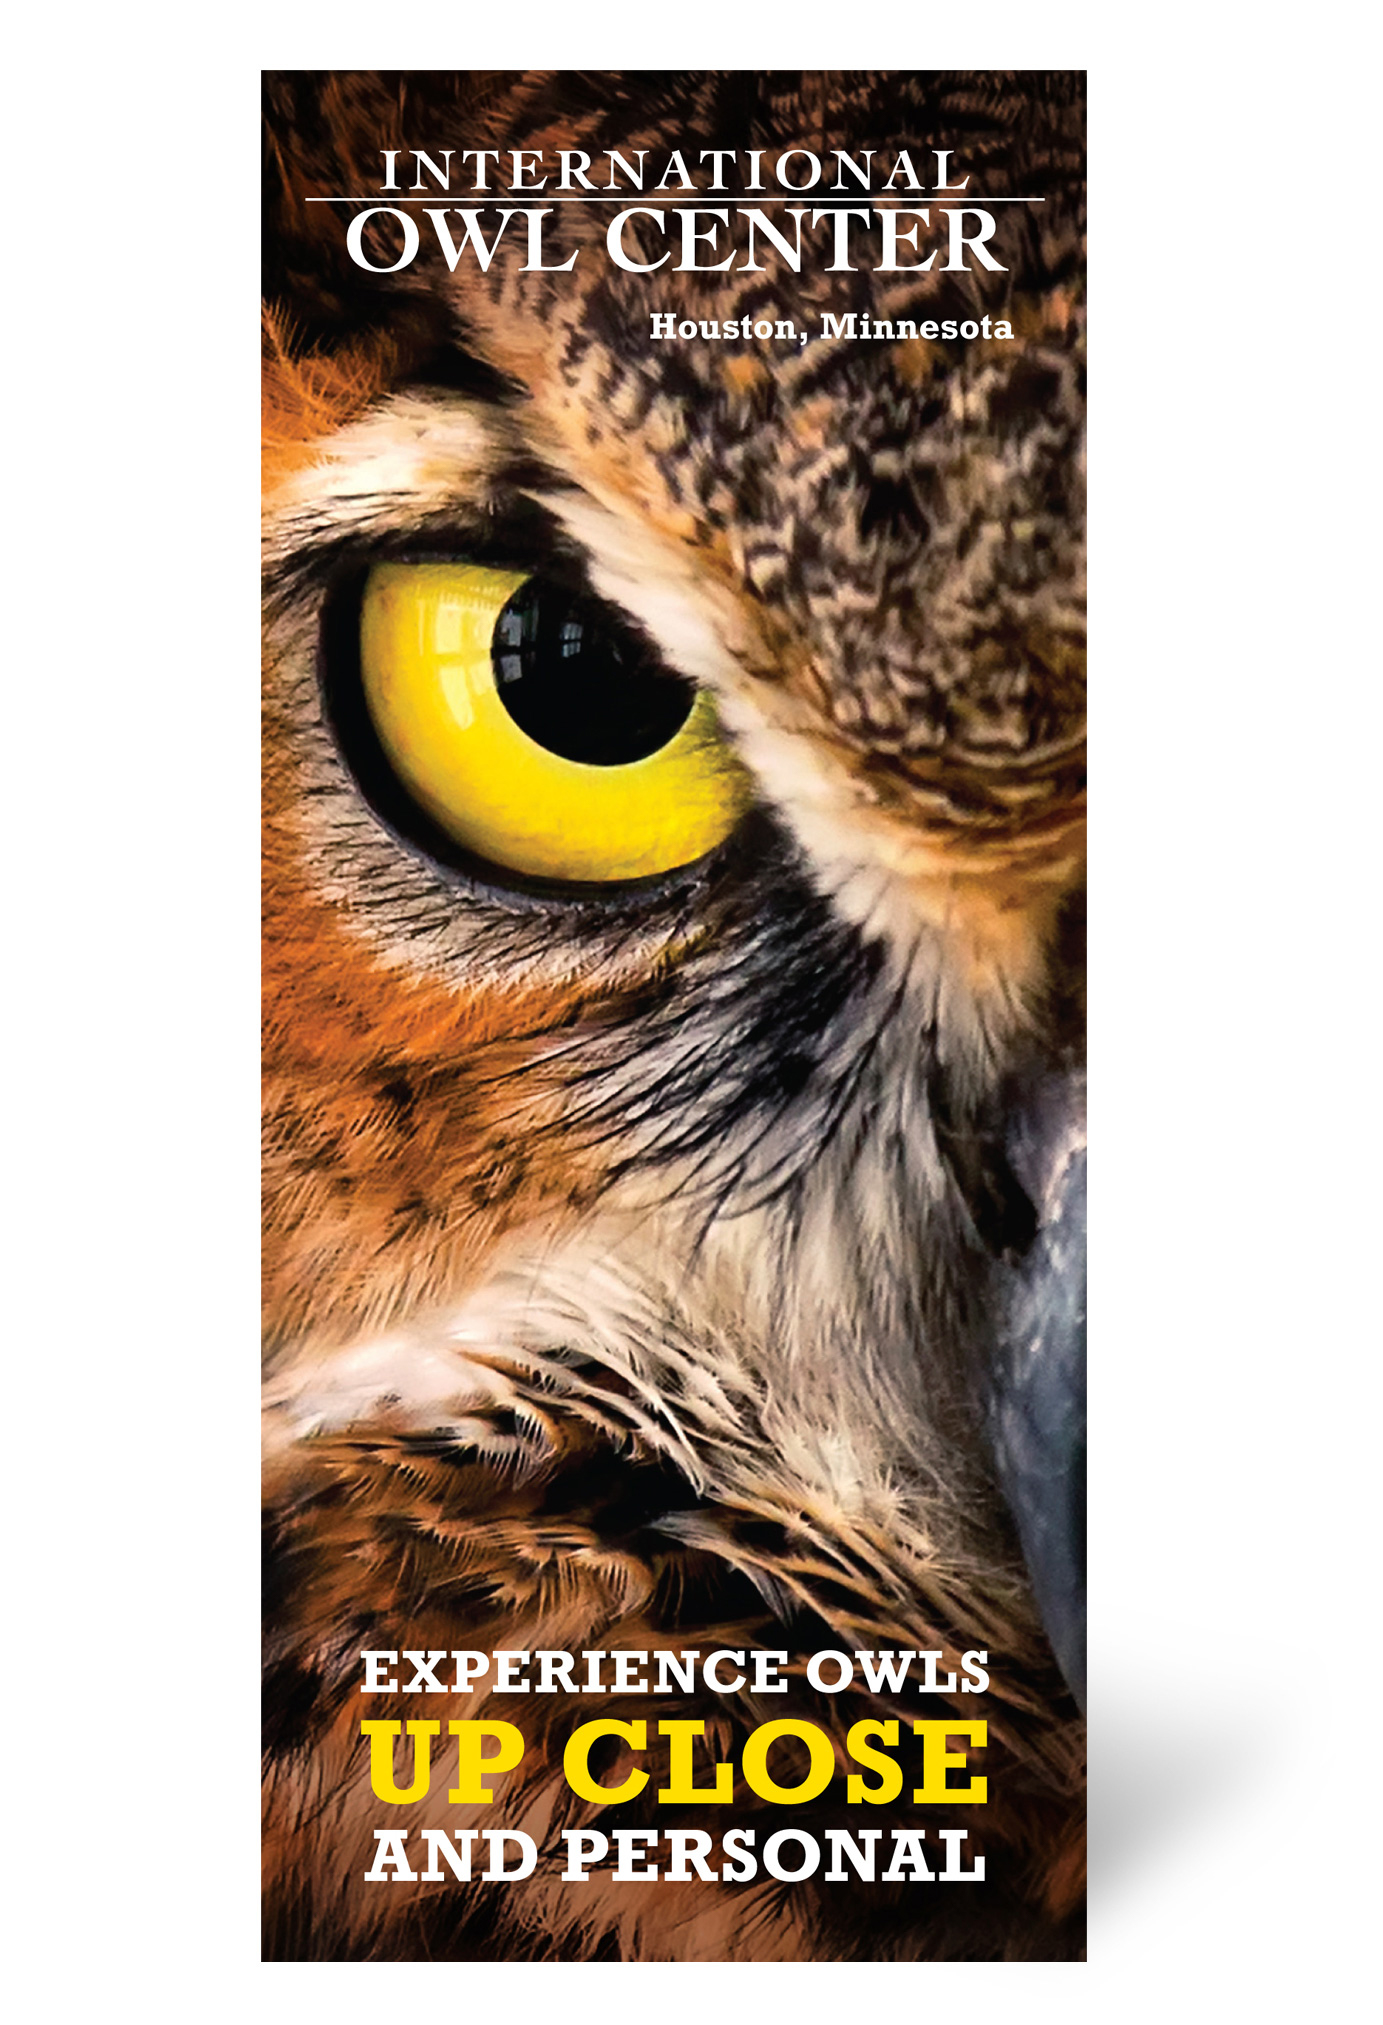 International Owl Center brochure